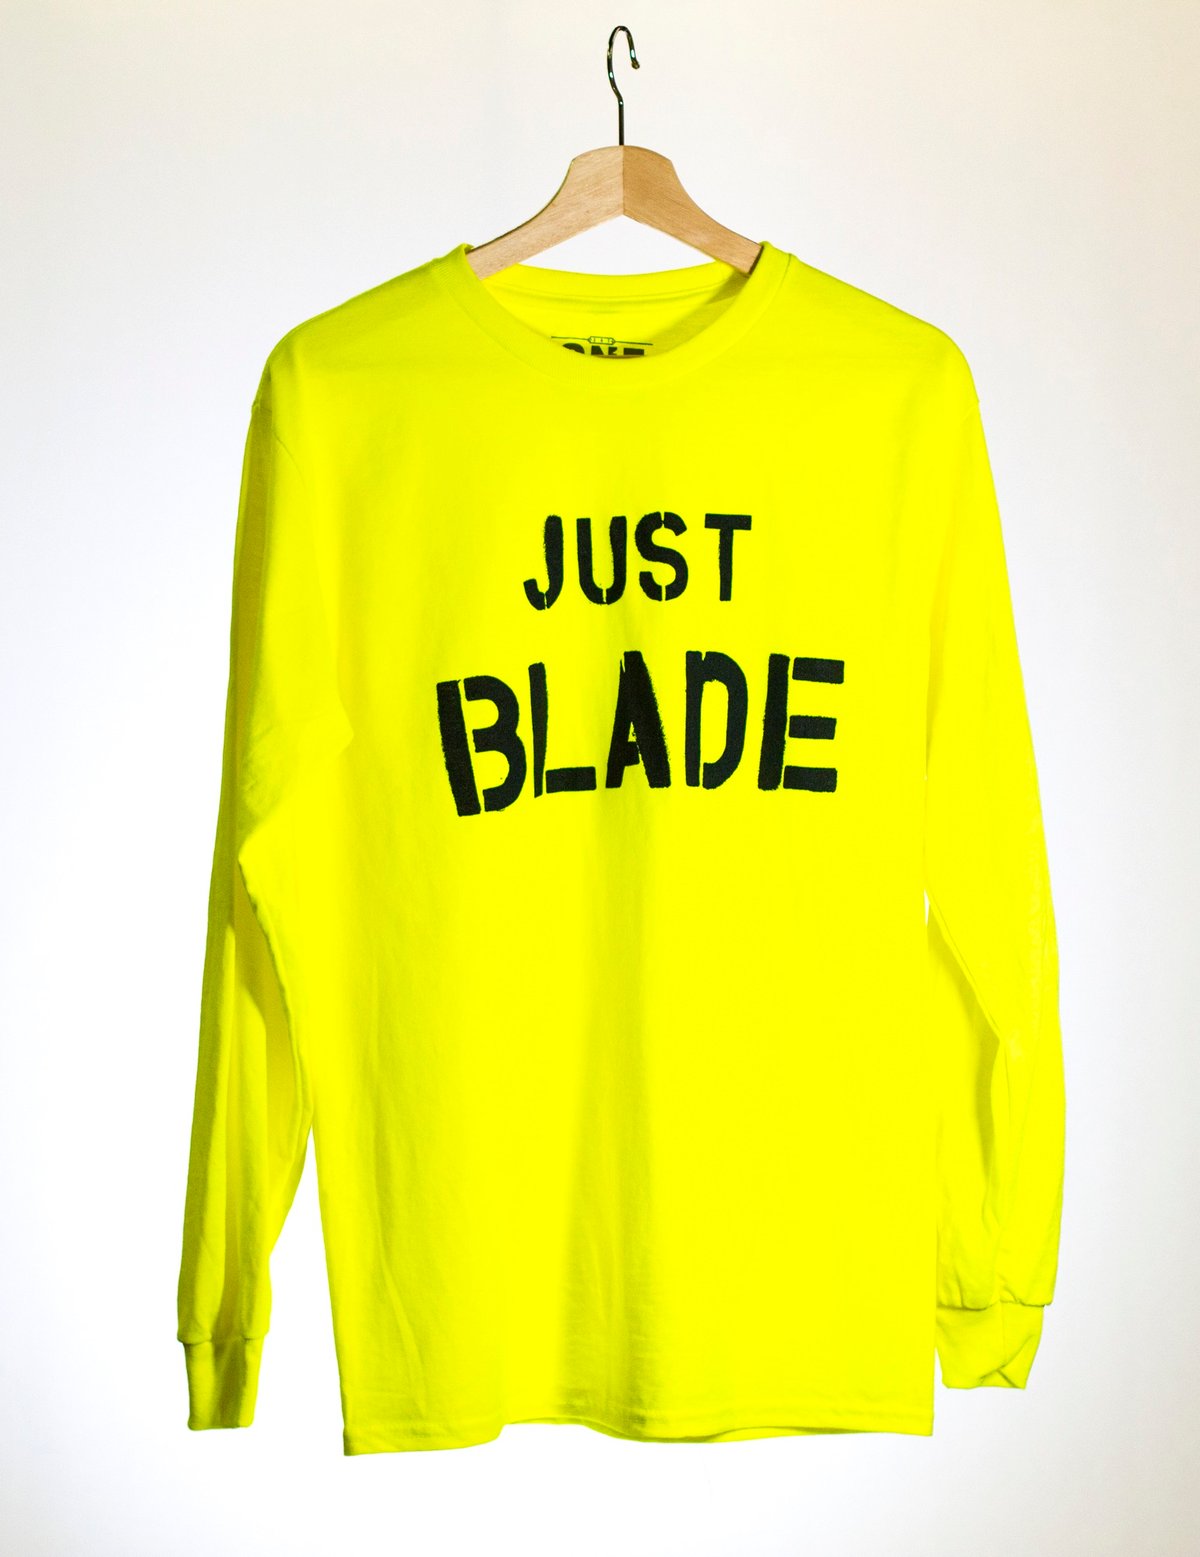 Just Blade Hi-Viz [Safety Green]